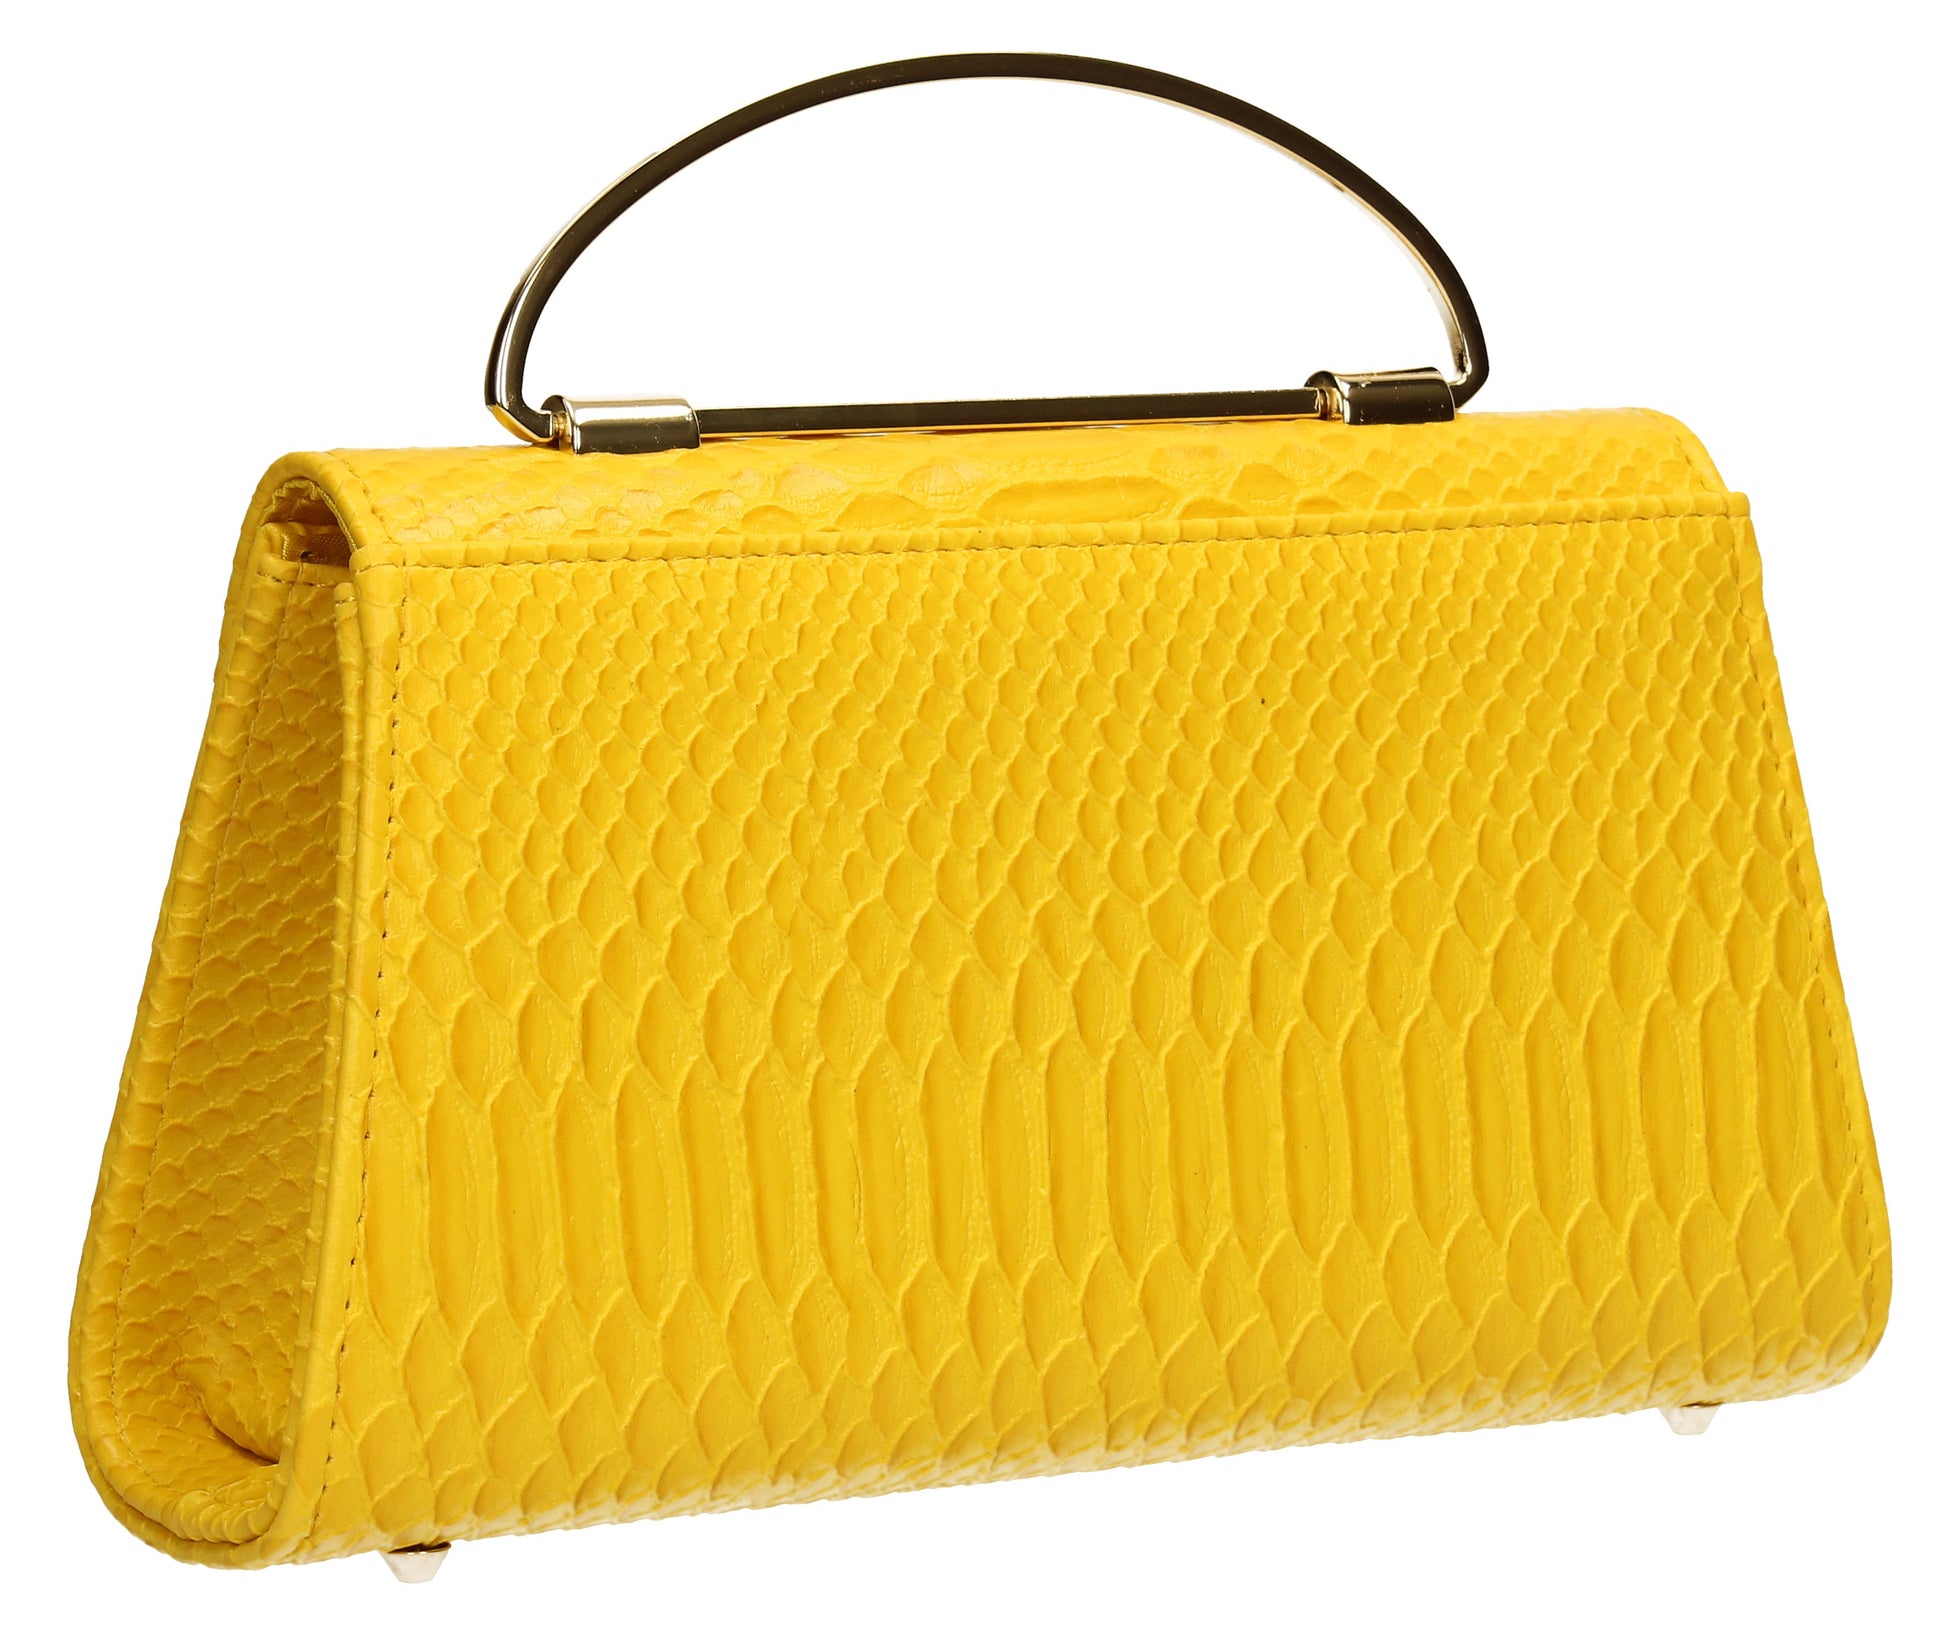 SWANKYSWANS Laura Clutch Bag Yellow Cute Cheap Clutch Bag For Weddings School and Work